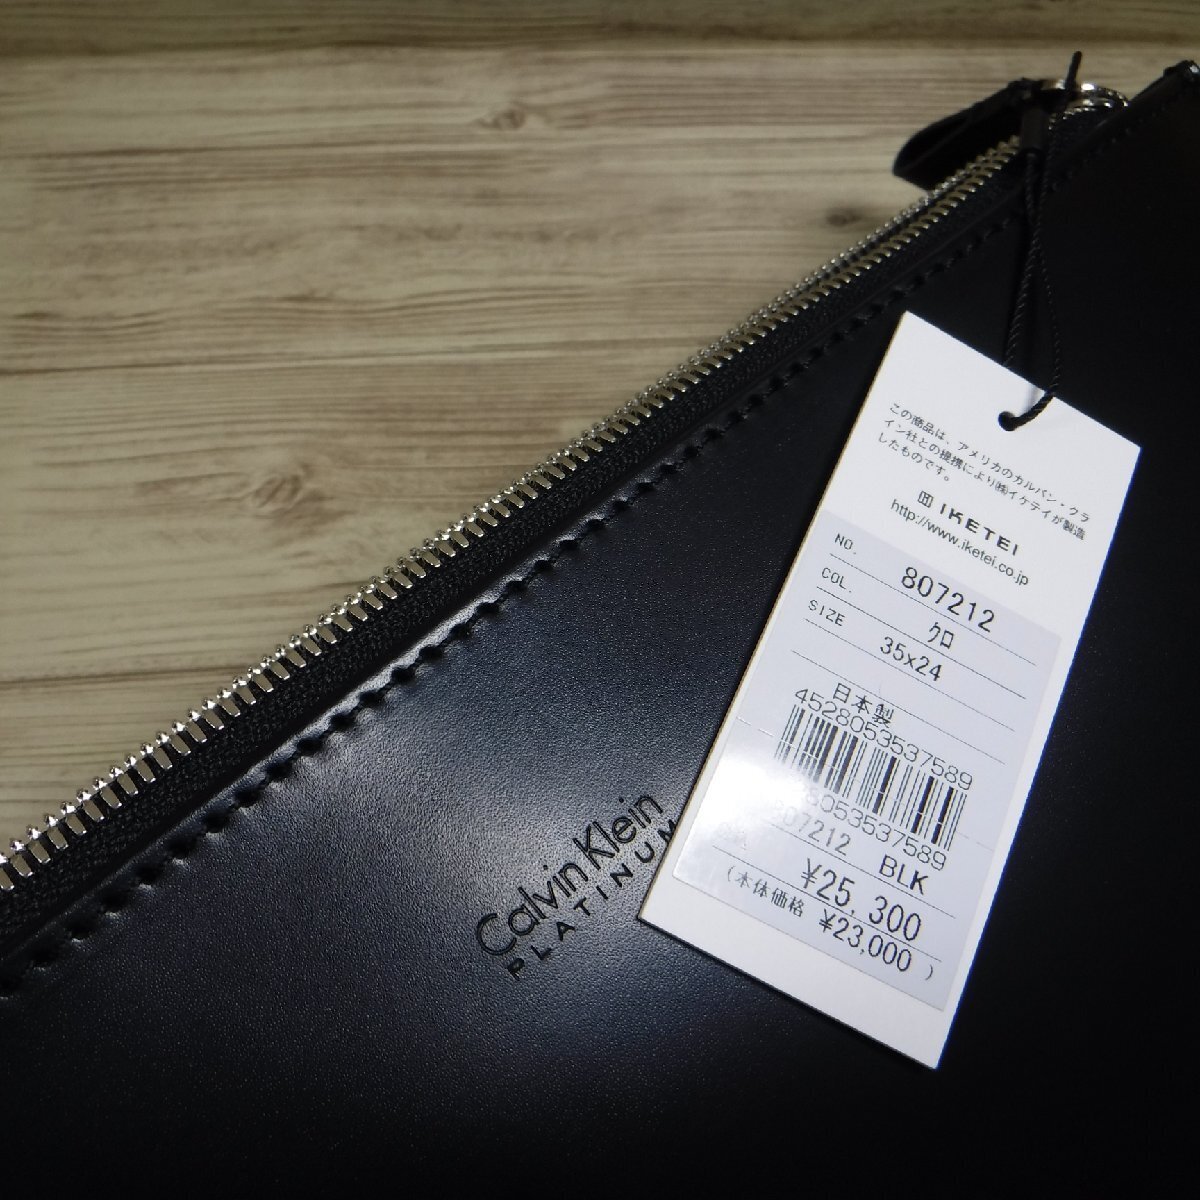 BB933 Calvin Klein platinum regular price 25300 jpy new goods black leather clutch bag cow leather A4 size 807212 second bag CALVIN KLEIN